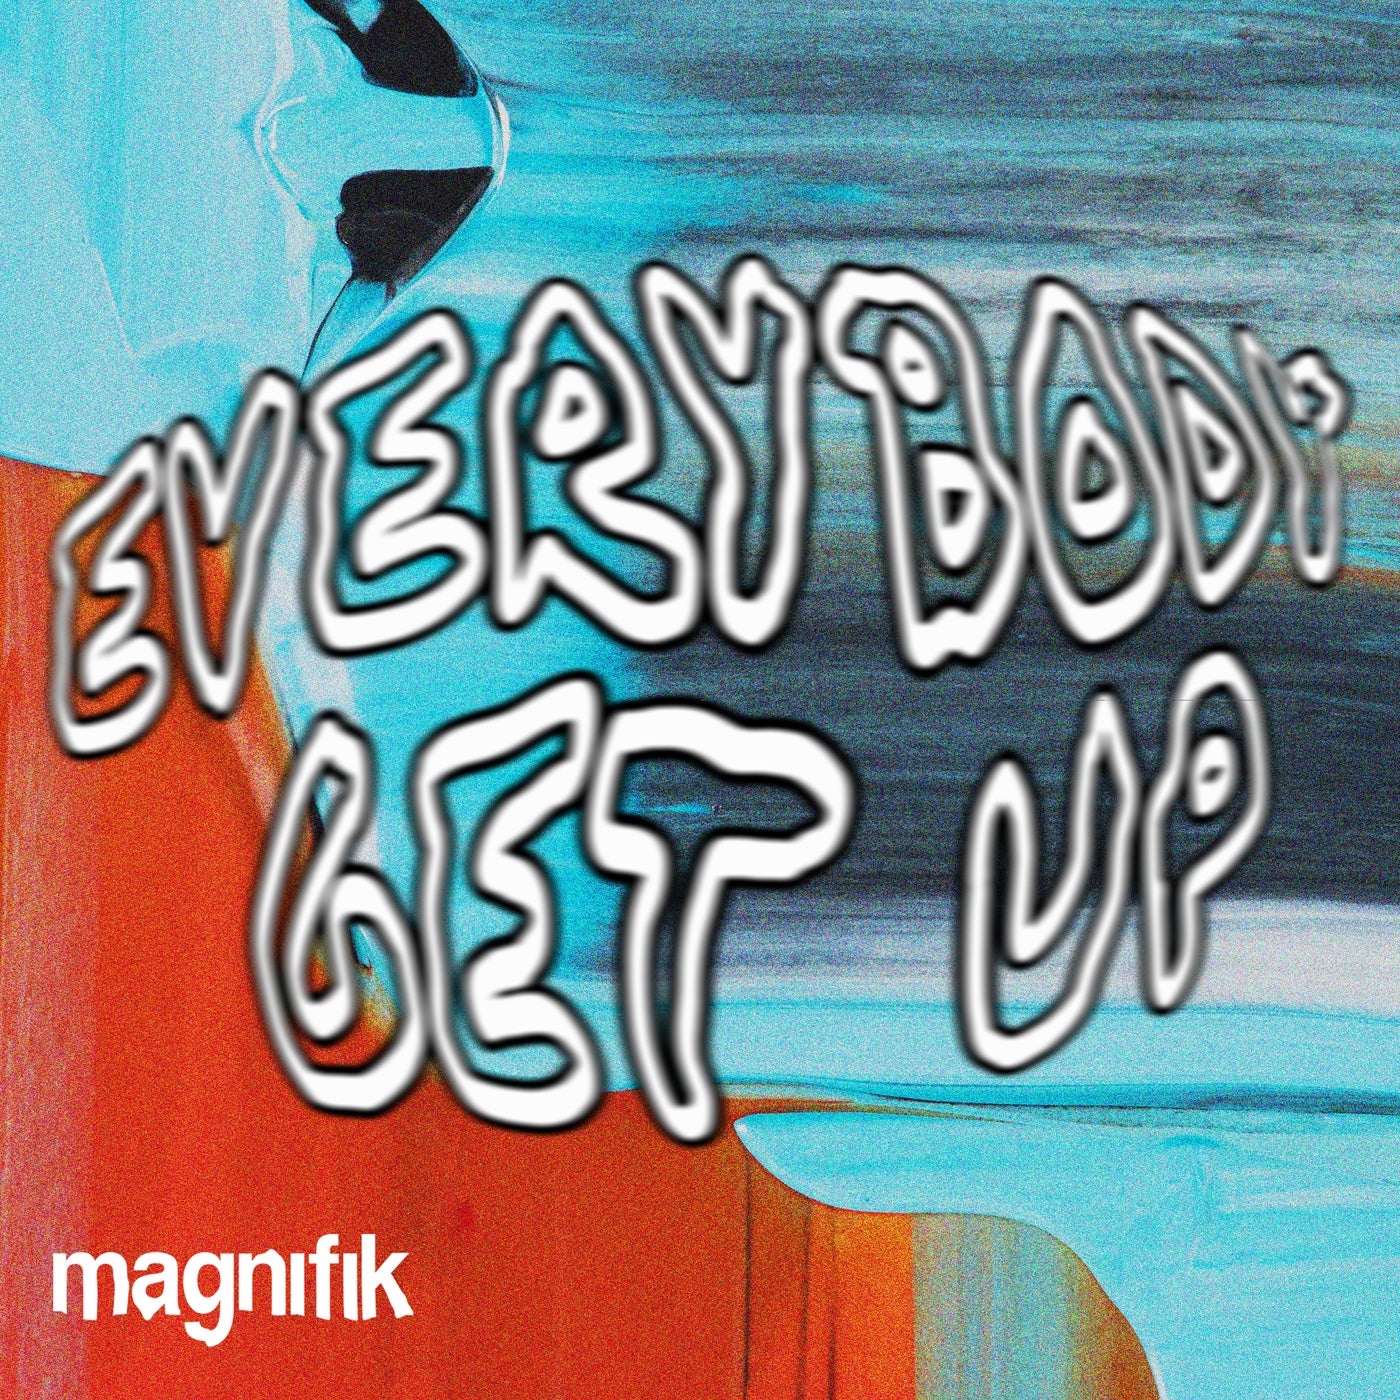 MAXI MERAKI & Samm (BE) - Everybody Get Up on Magnifik Music